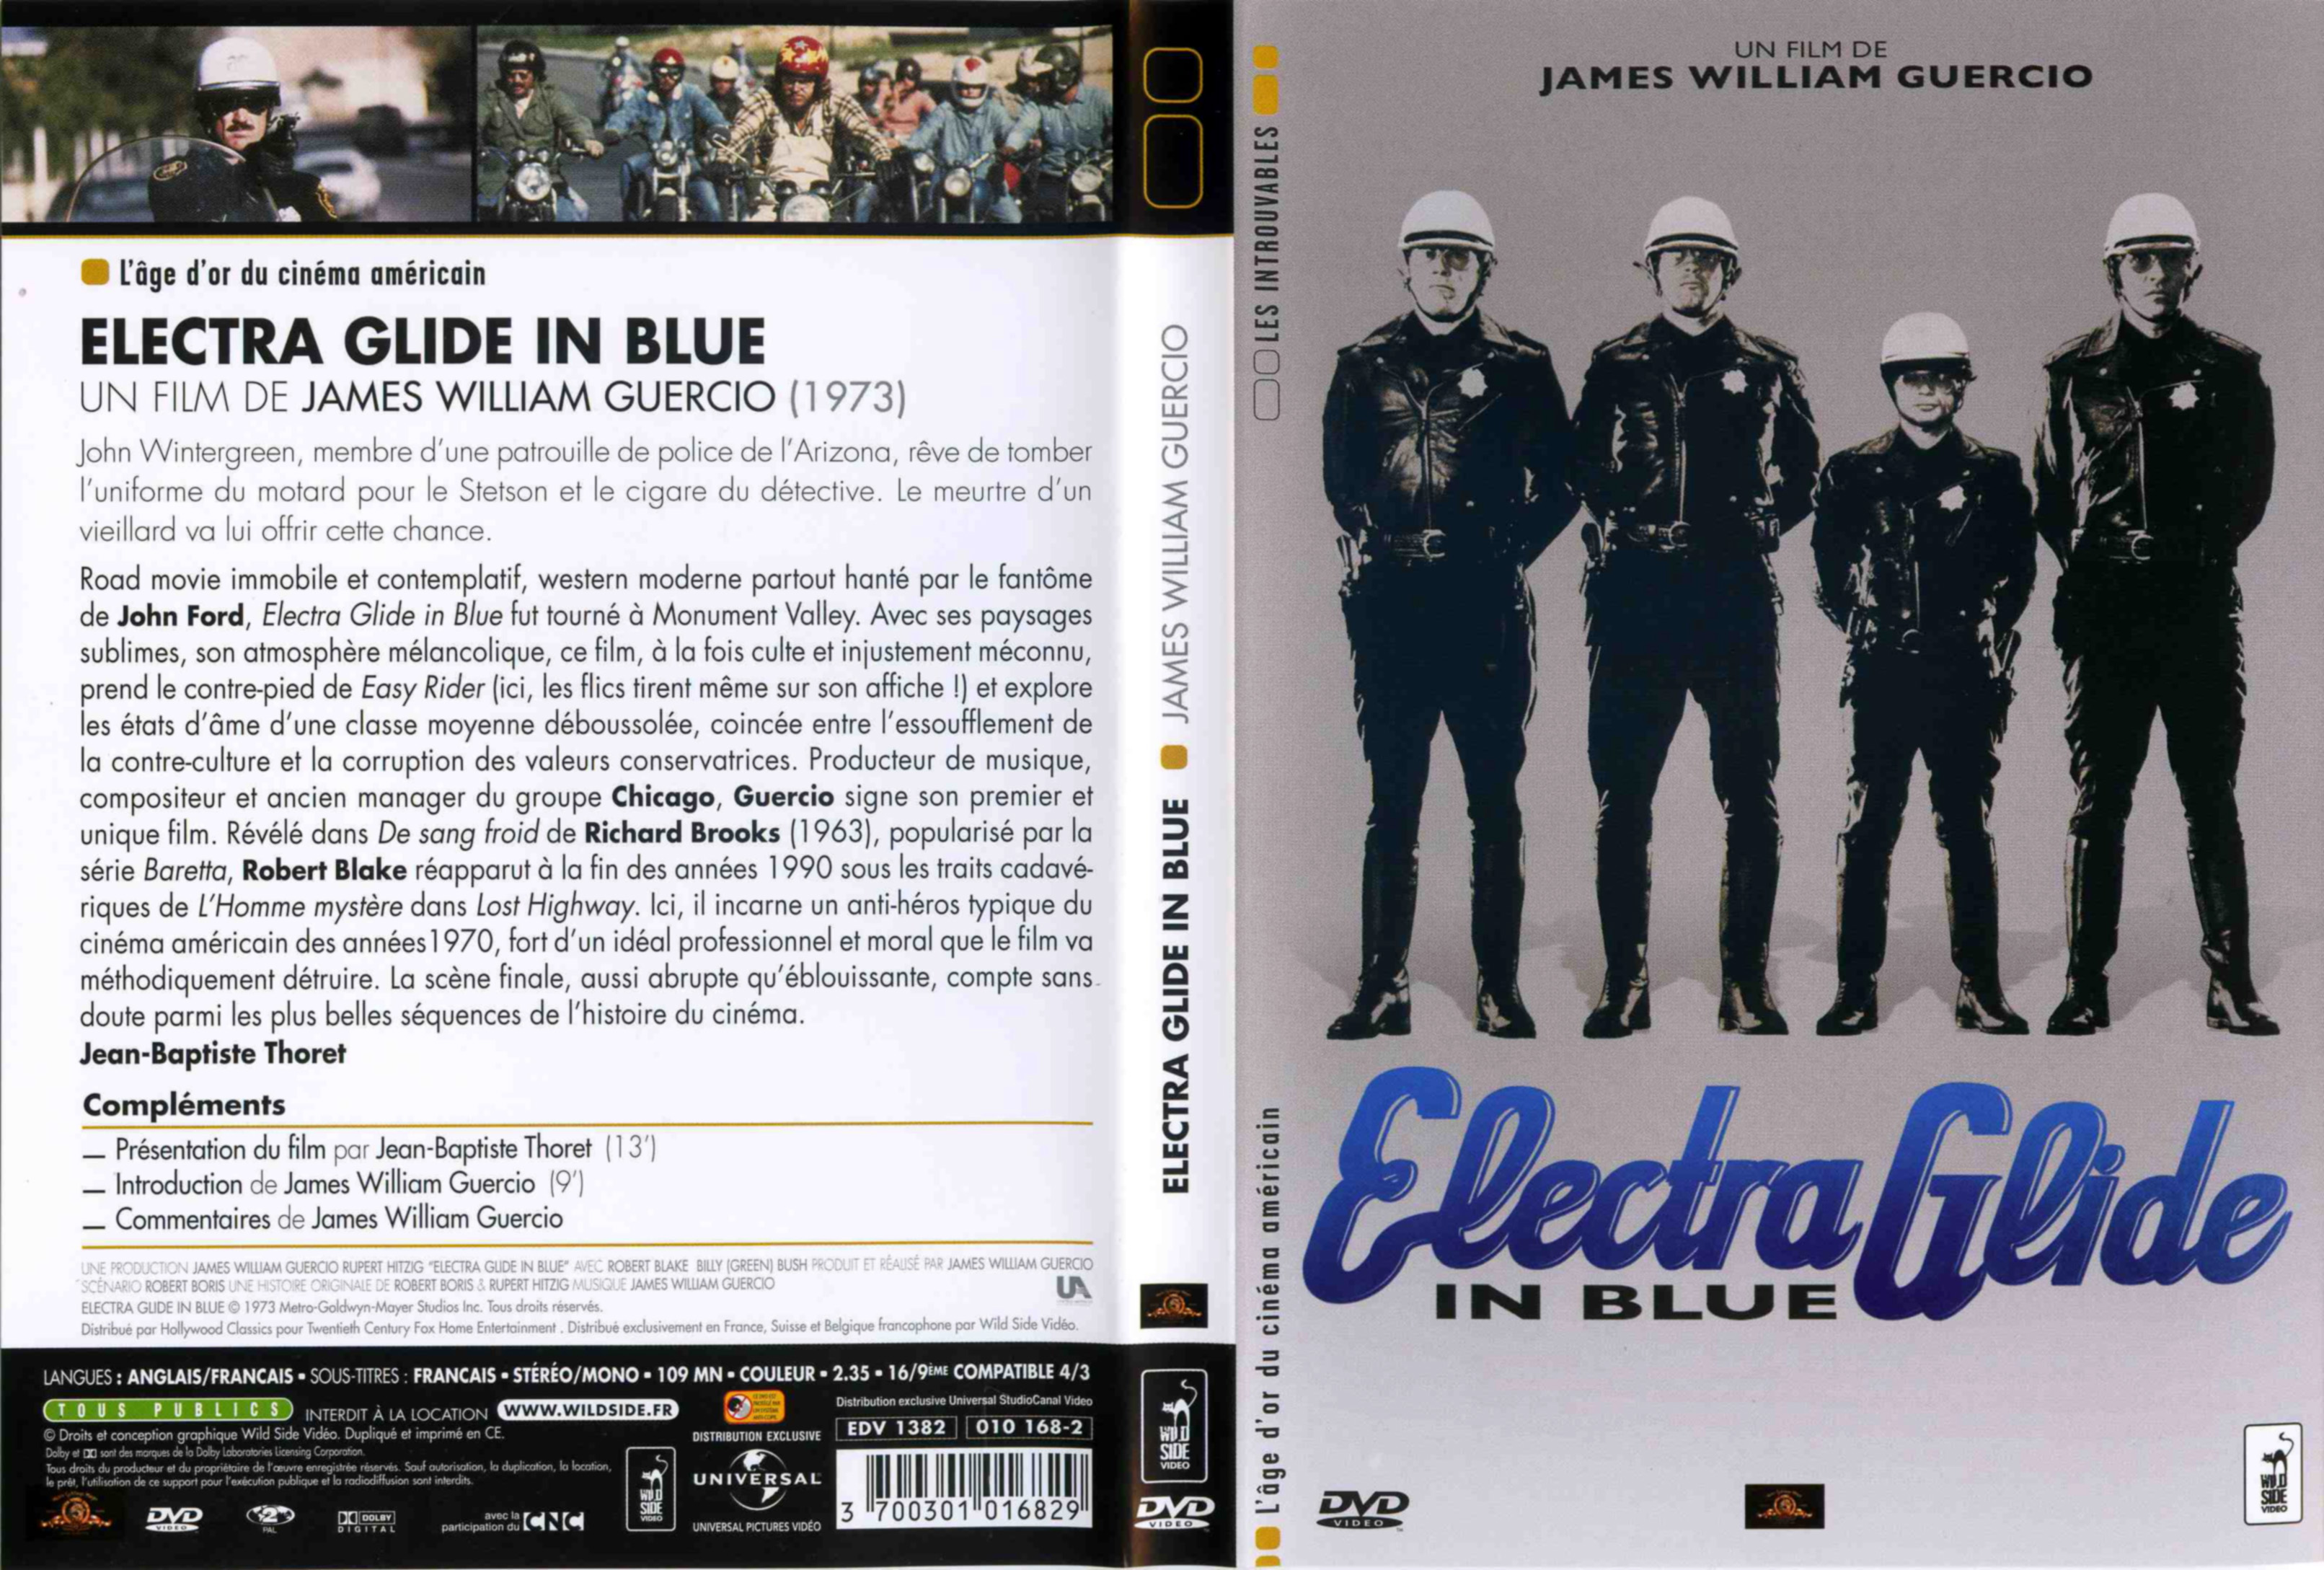 Jaquette DVD Electra glide in blue